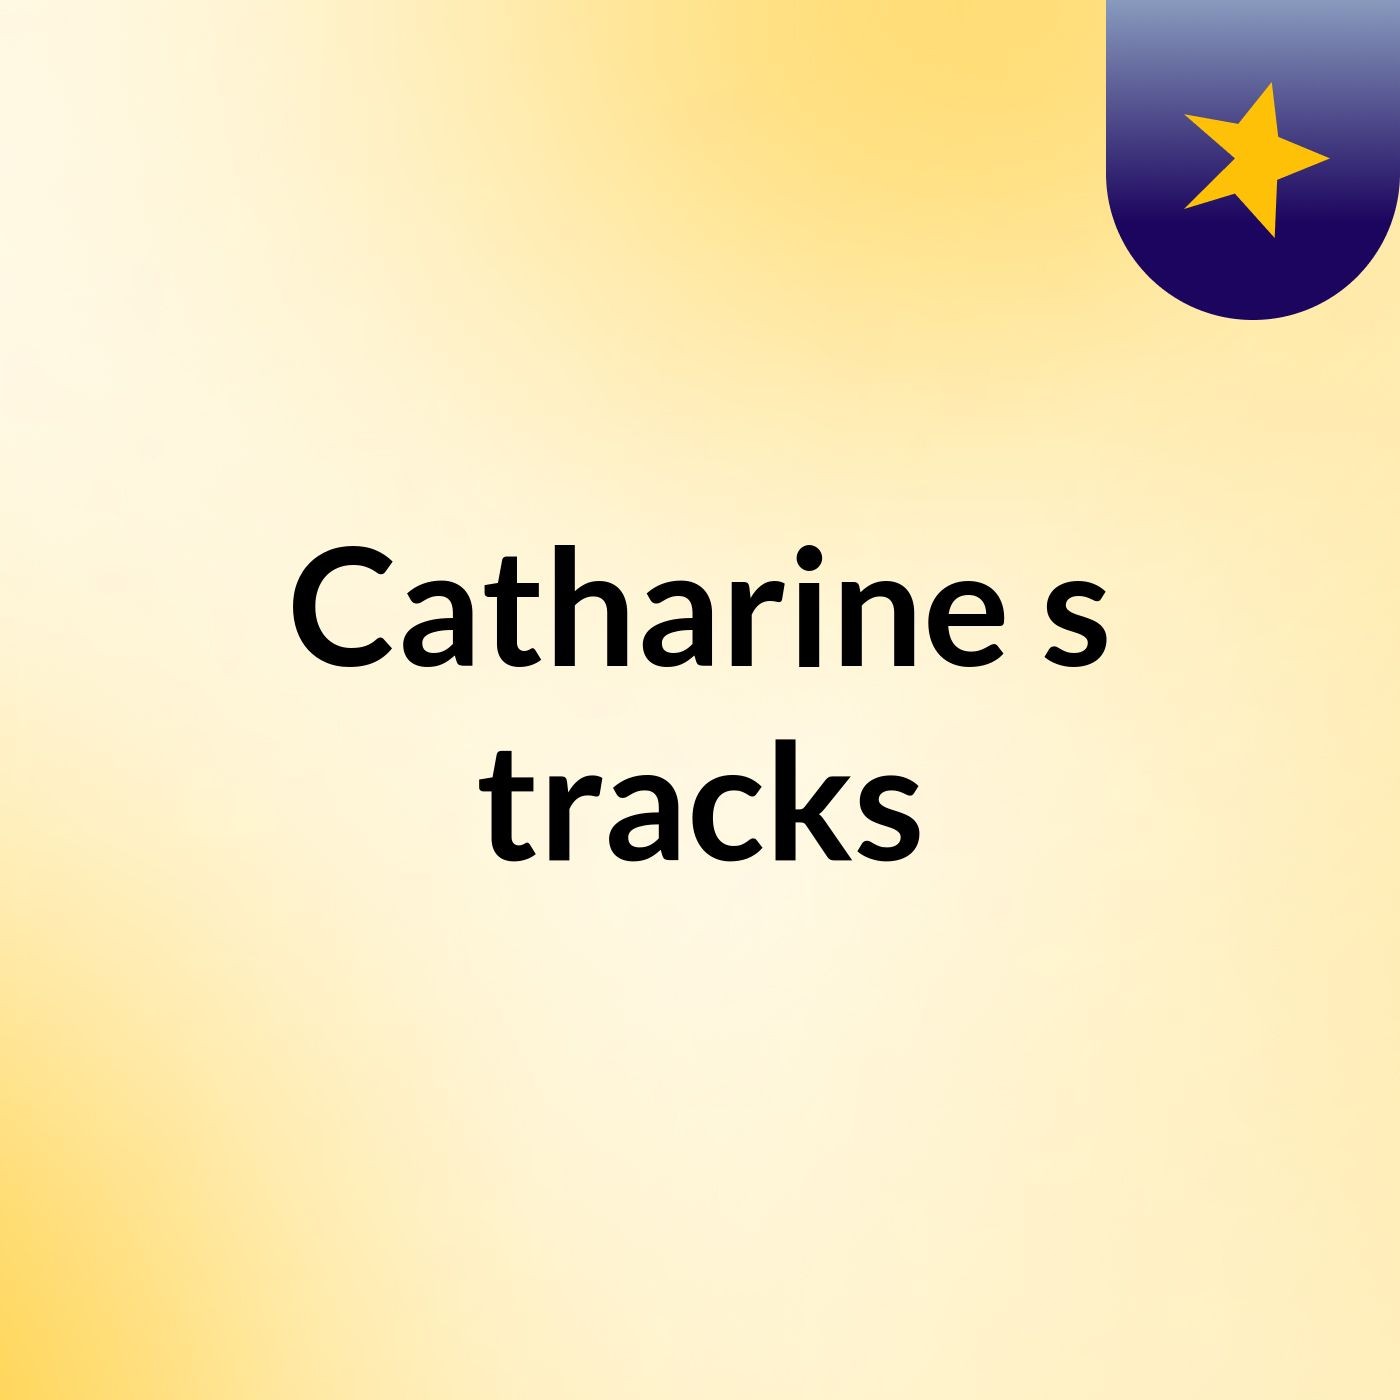 Catharine's tracks